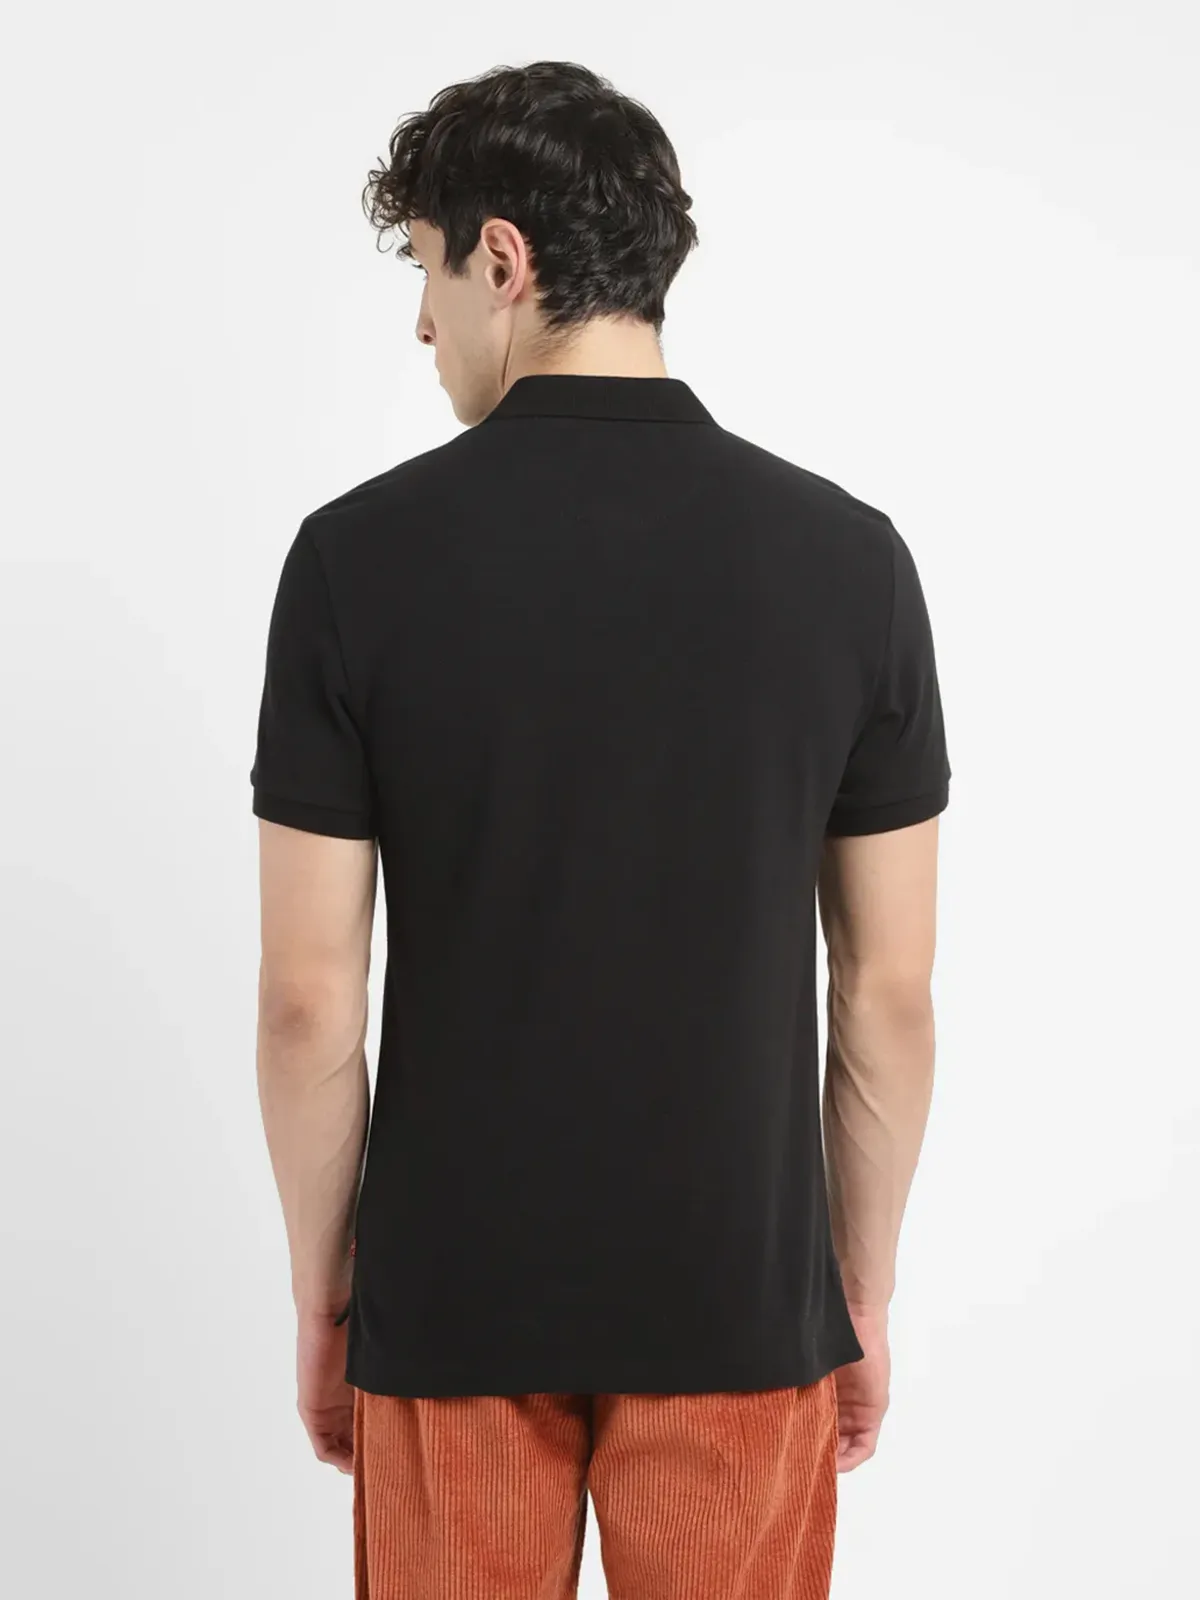 Levis black polo casual t-shirt